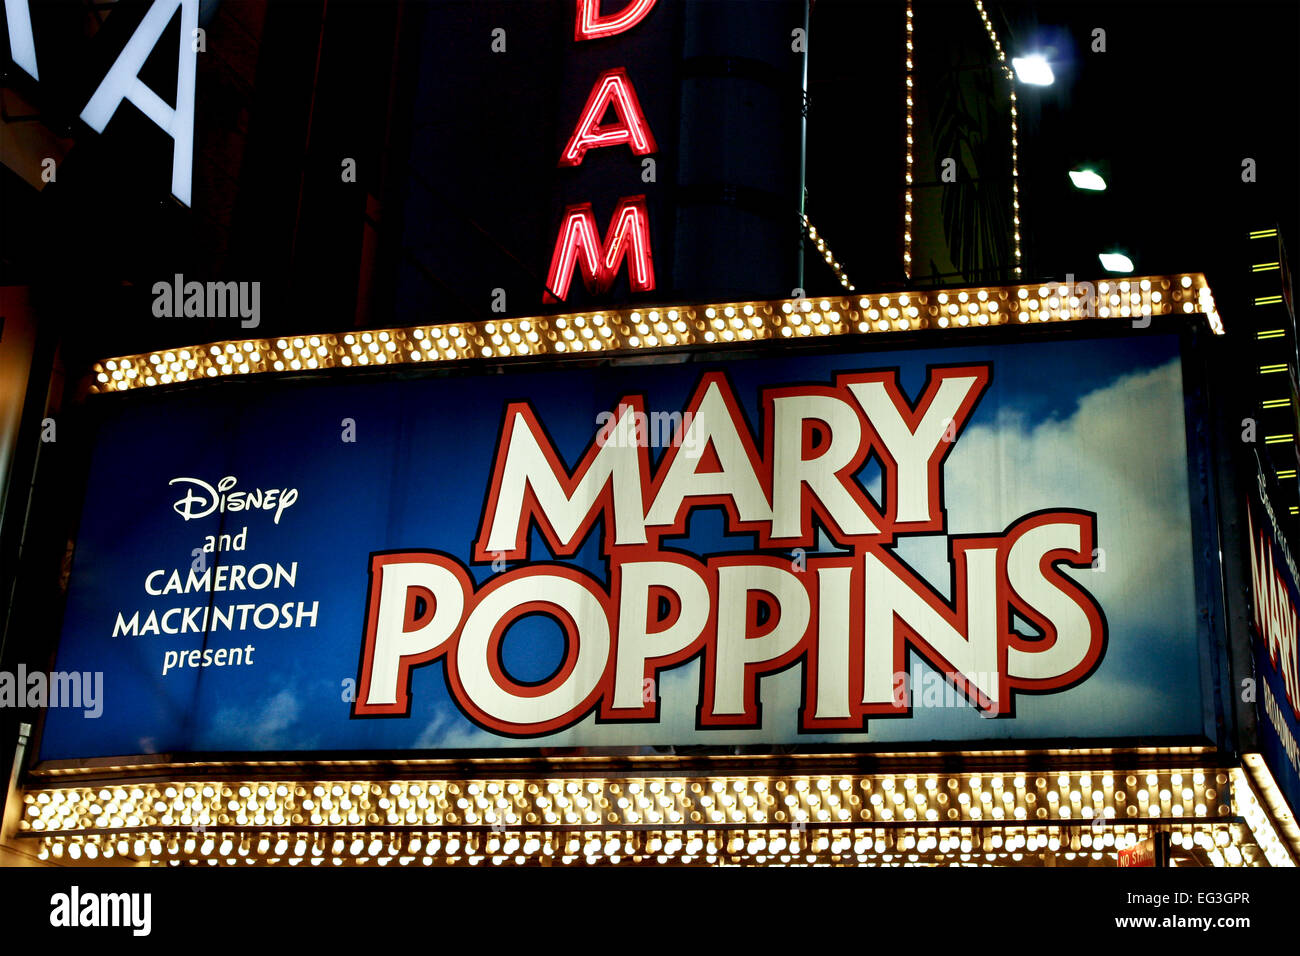 Mary Poppins Billboard Show, New Amsterdam Theater, Theaterviertel bei Nacht. Times Square. New York City, NYC, NY, Vereinigte Staaten von Amerika, USA Stockfoto